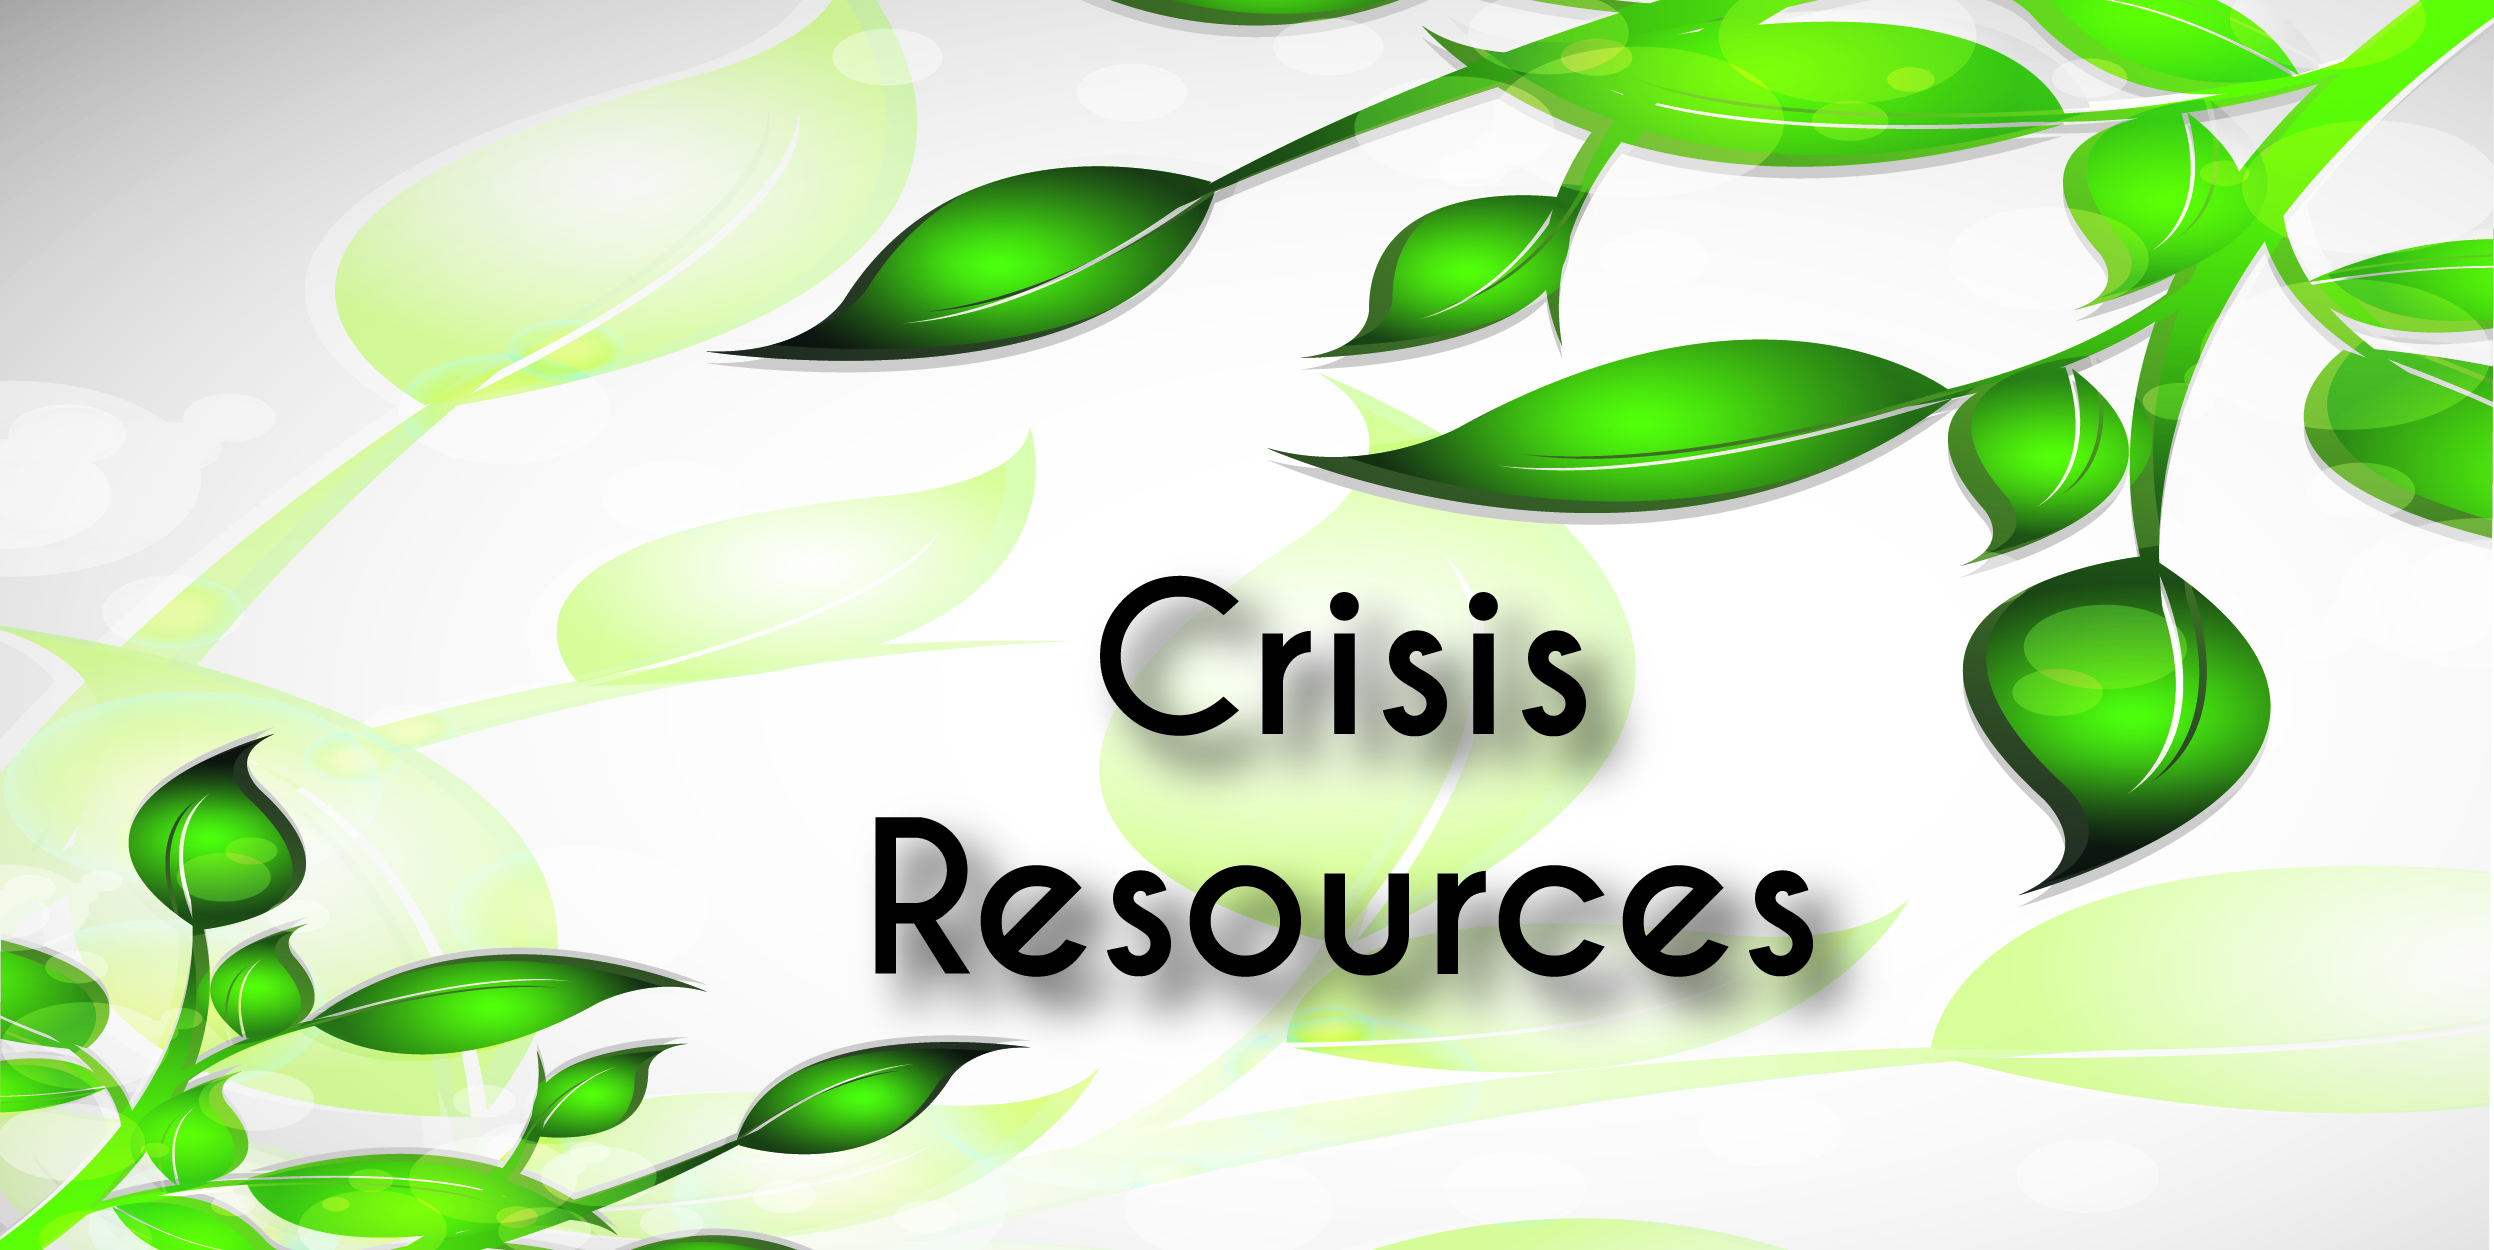 Crisis Resources